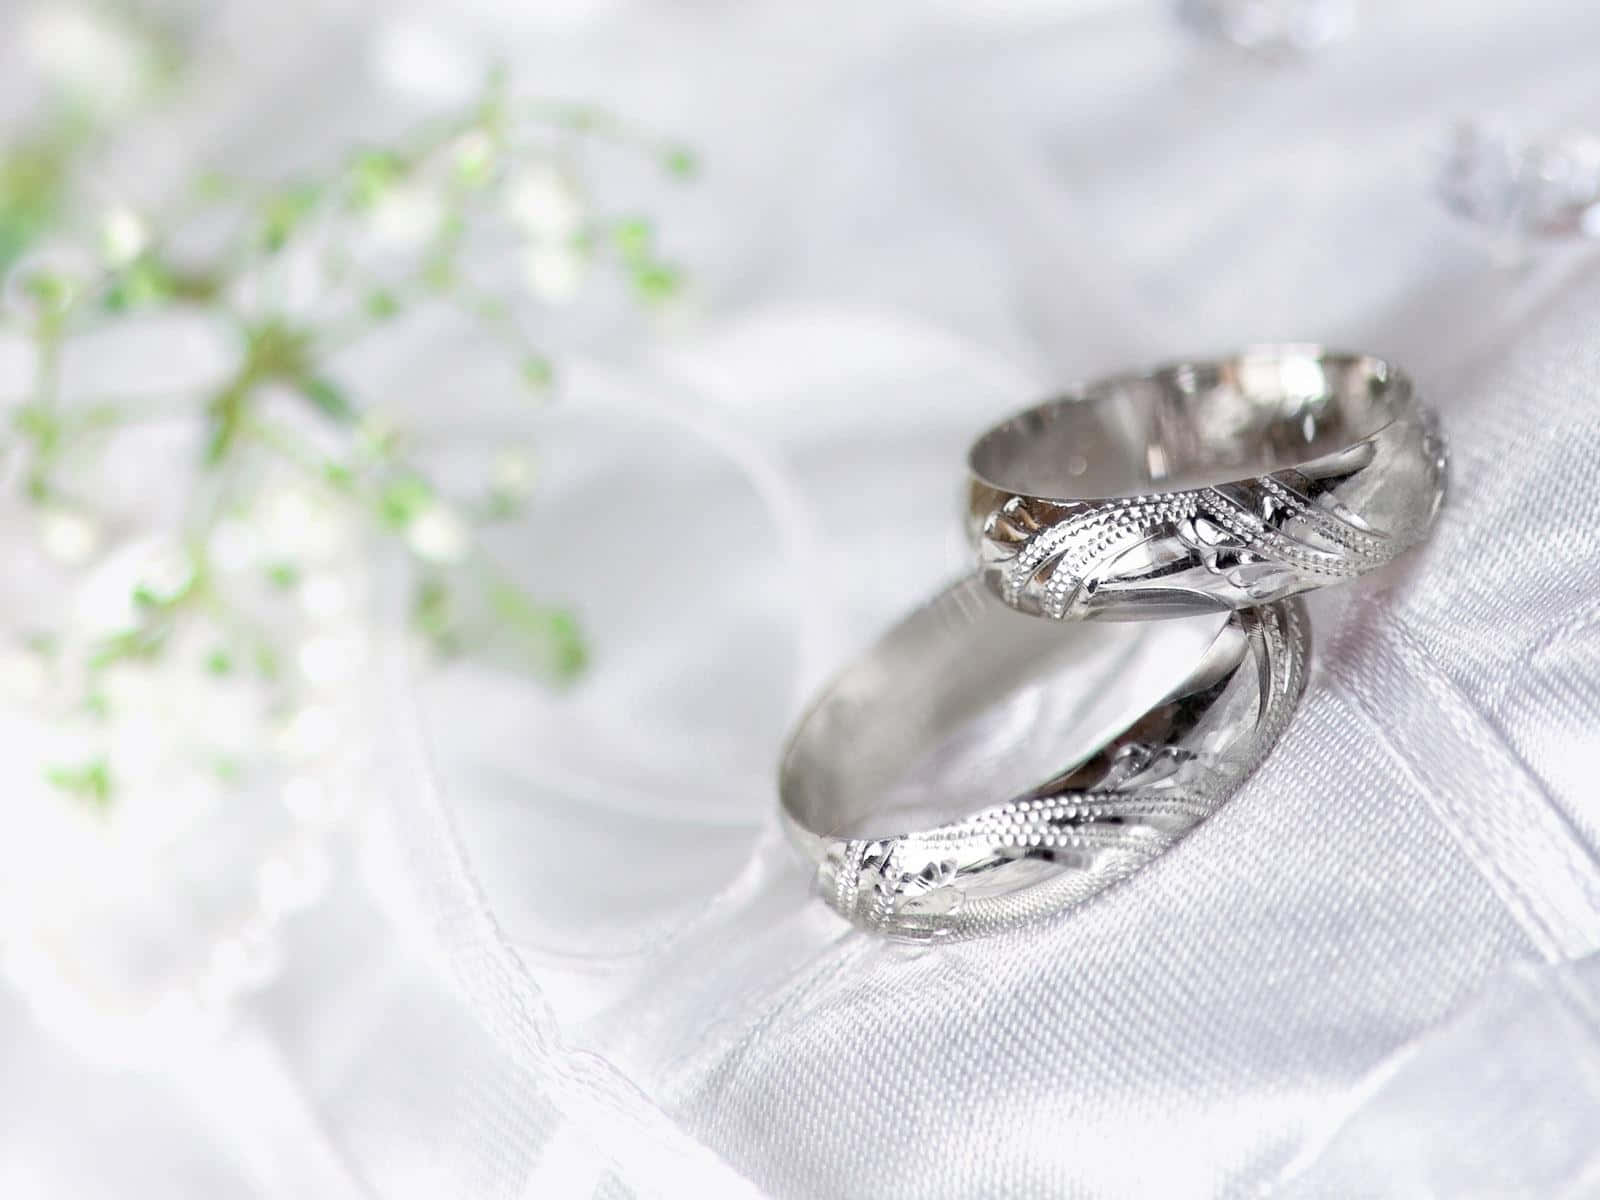 Silverwedding Ring Picture In Swedish: Bild Av Silvervigselring